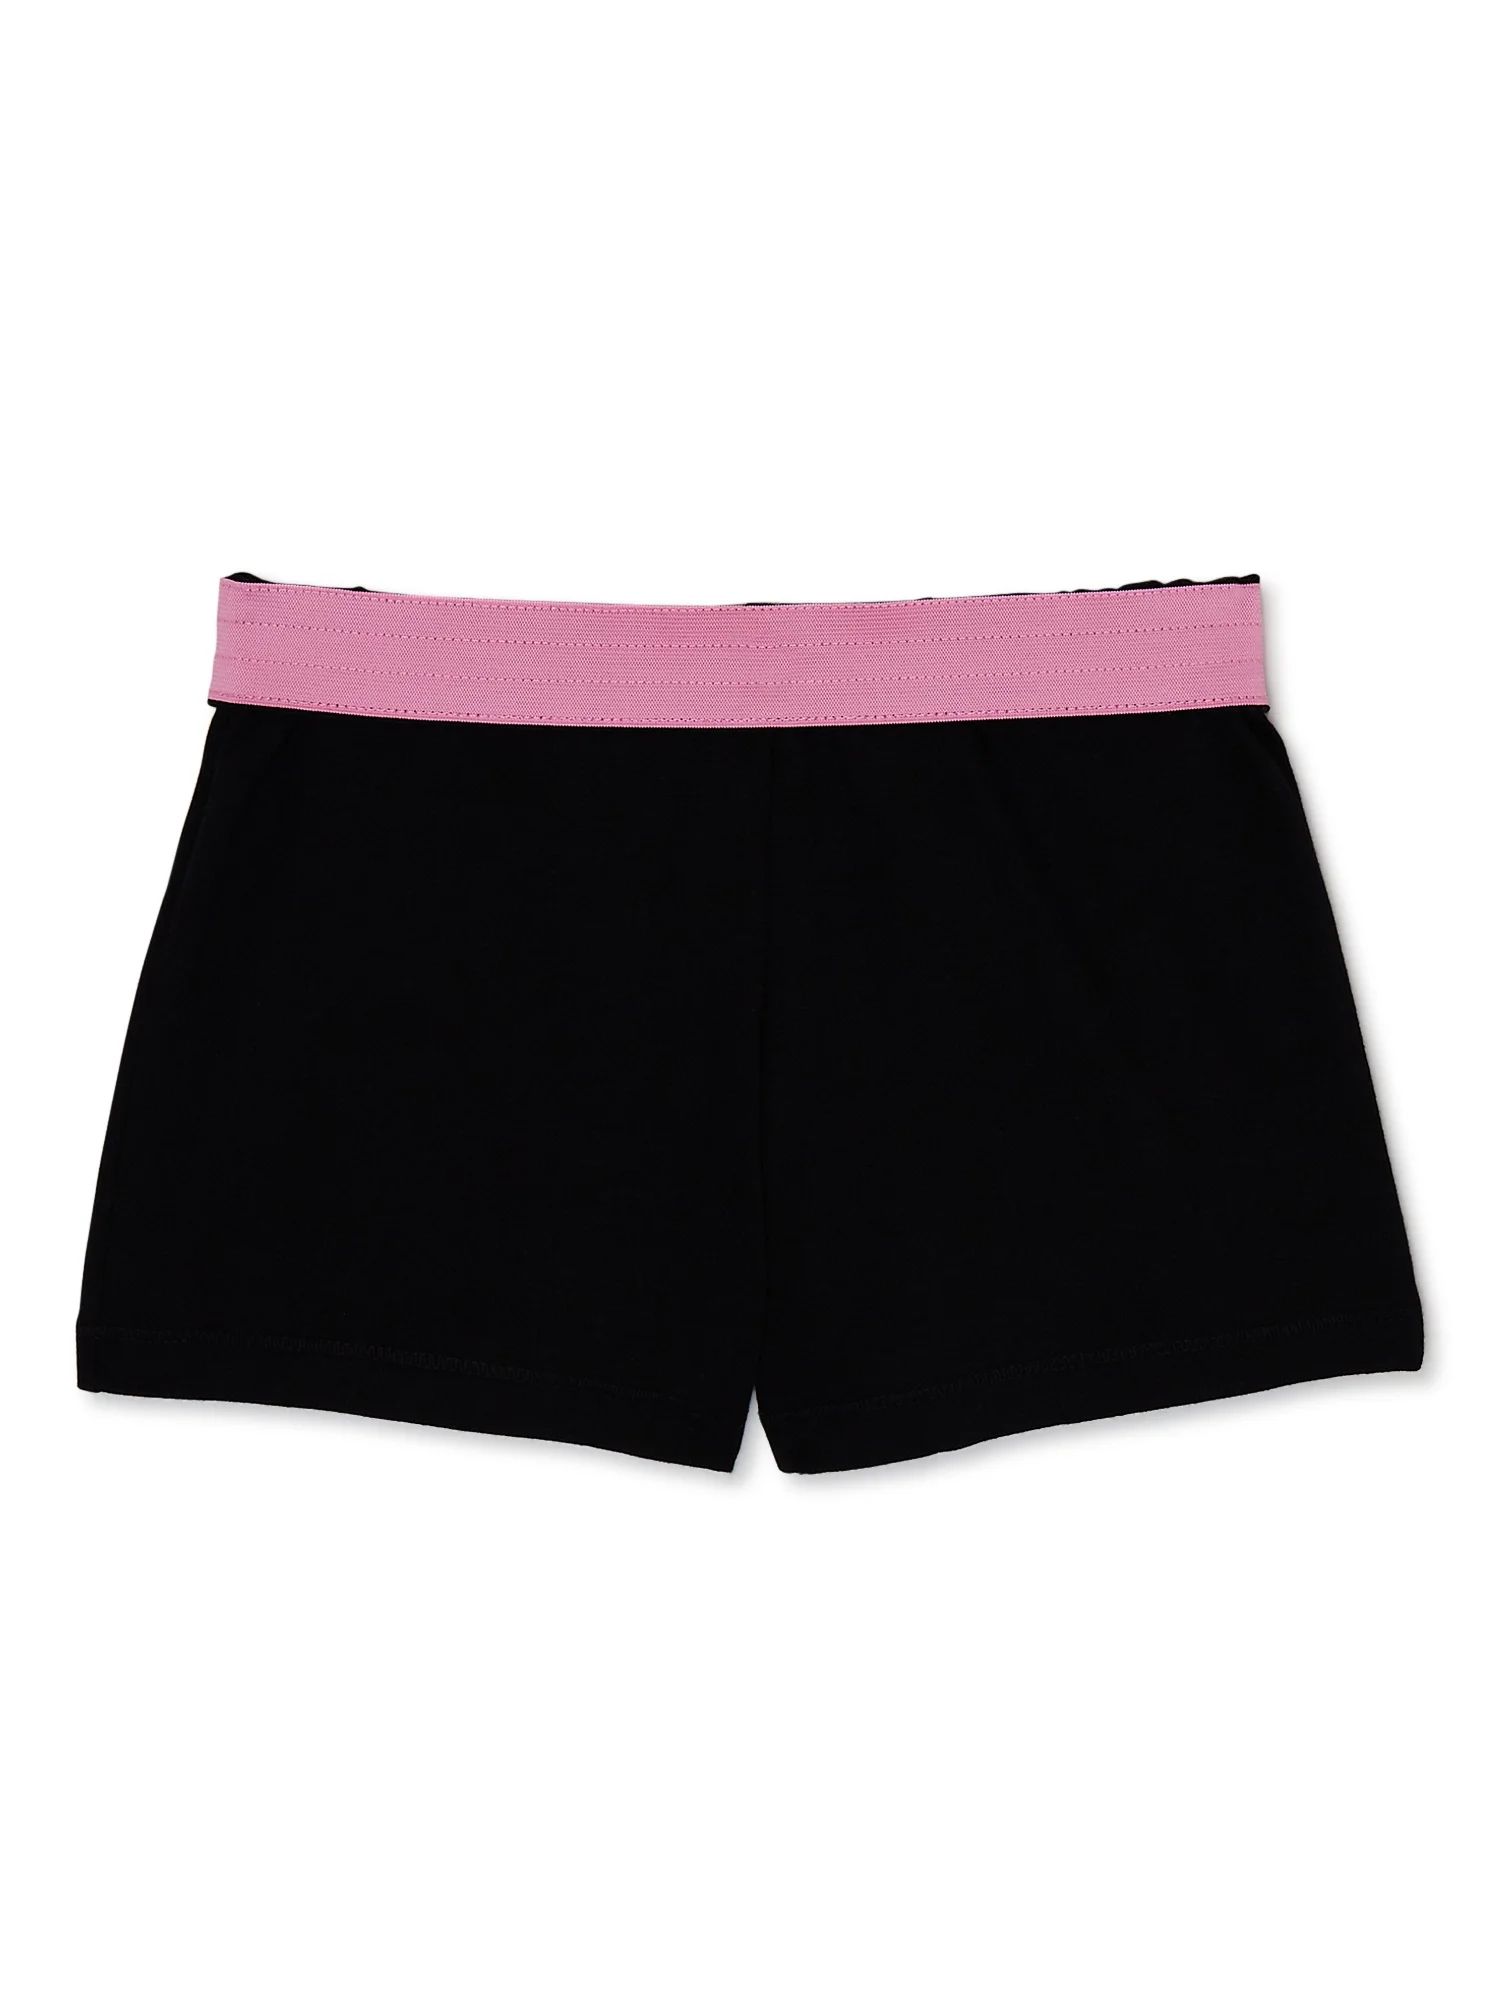 Wonder Nation Girls Play Shorts, Sizes 4-18 and Plus | Walmart (US)